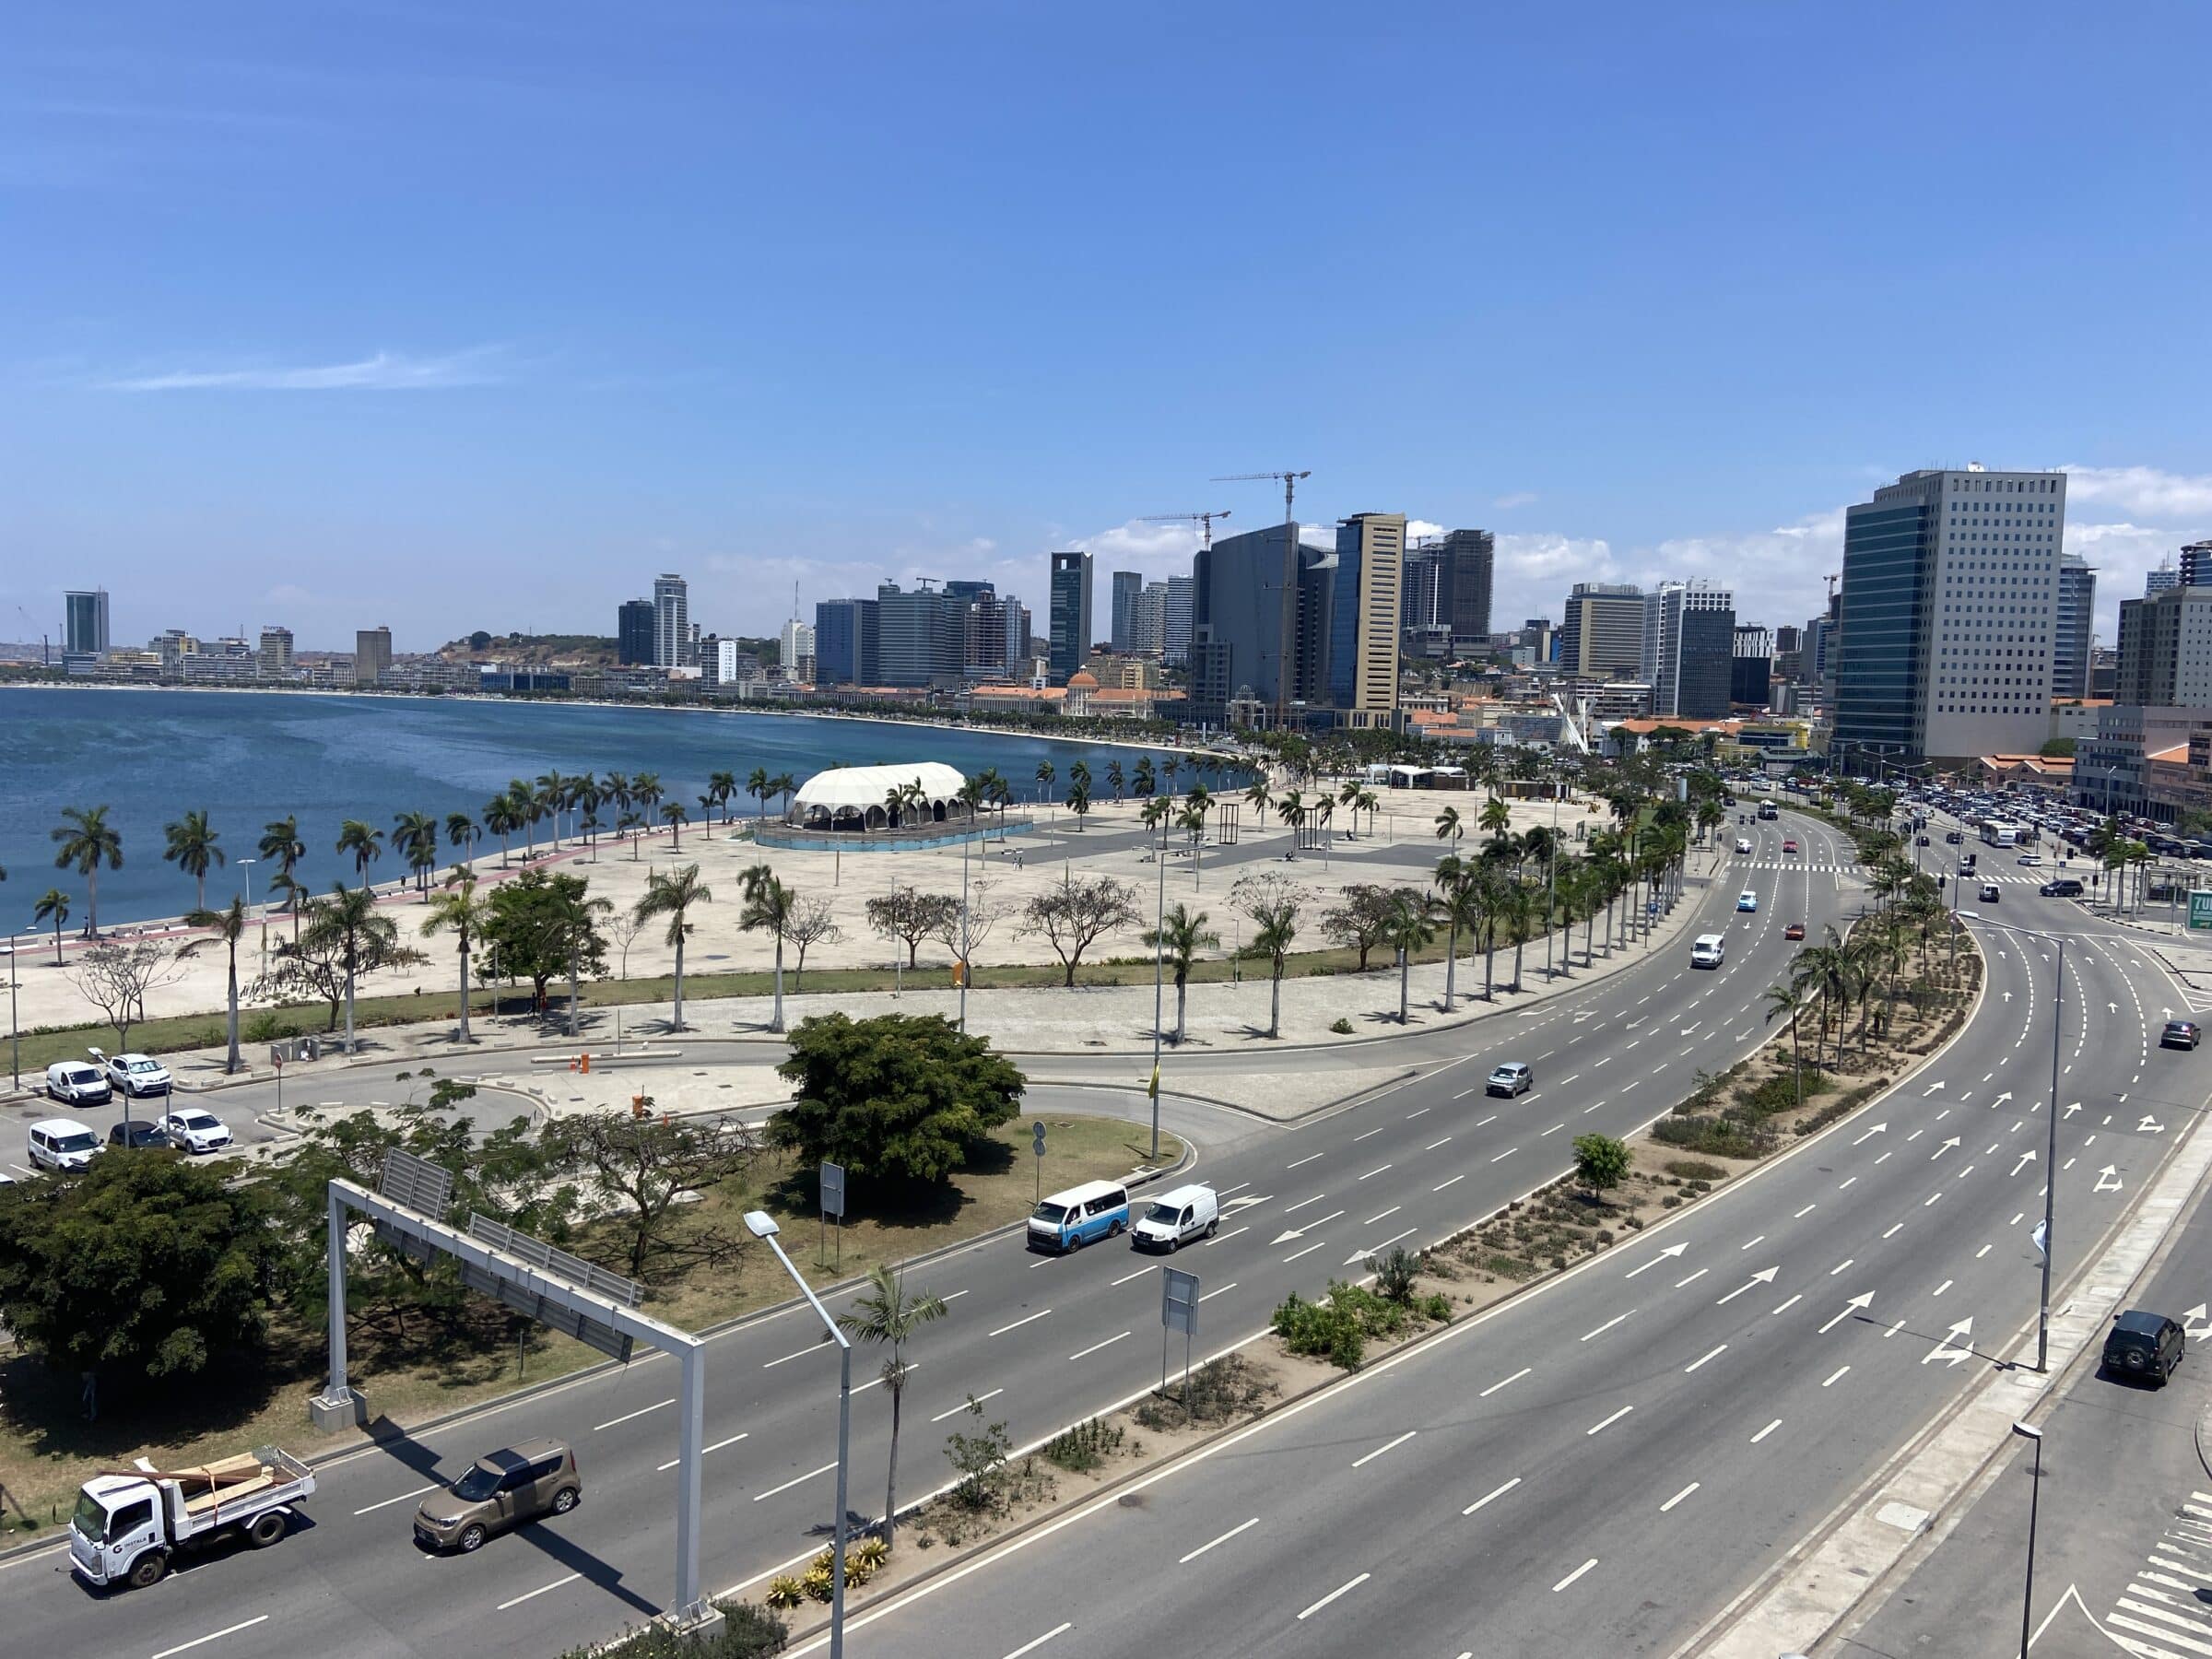 Boulevard Luanda | Overlanden in Angola